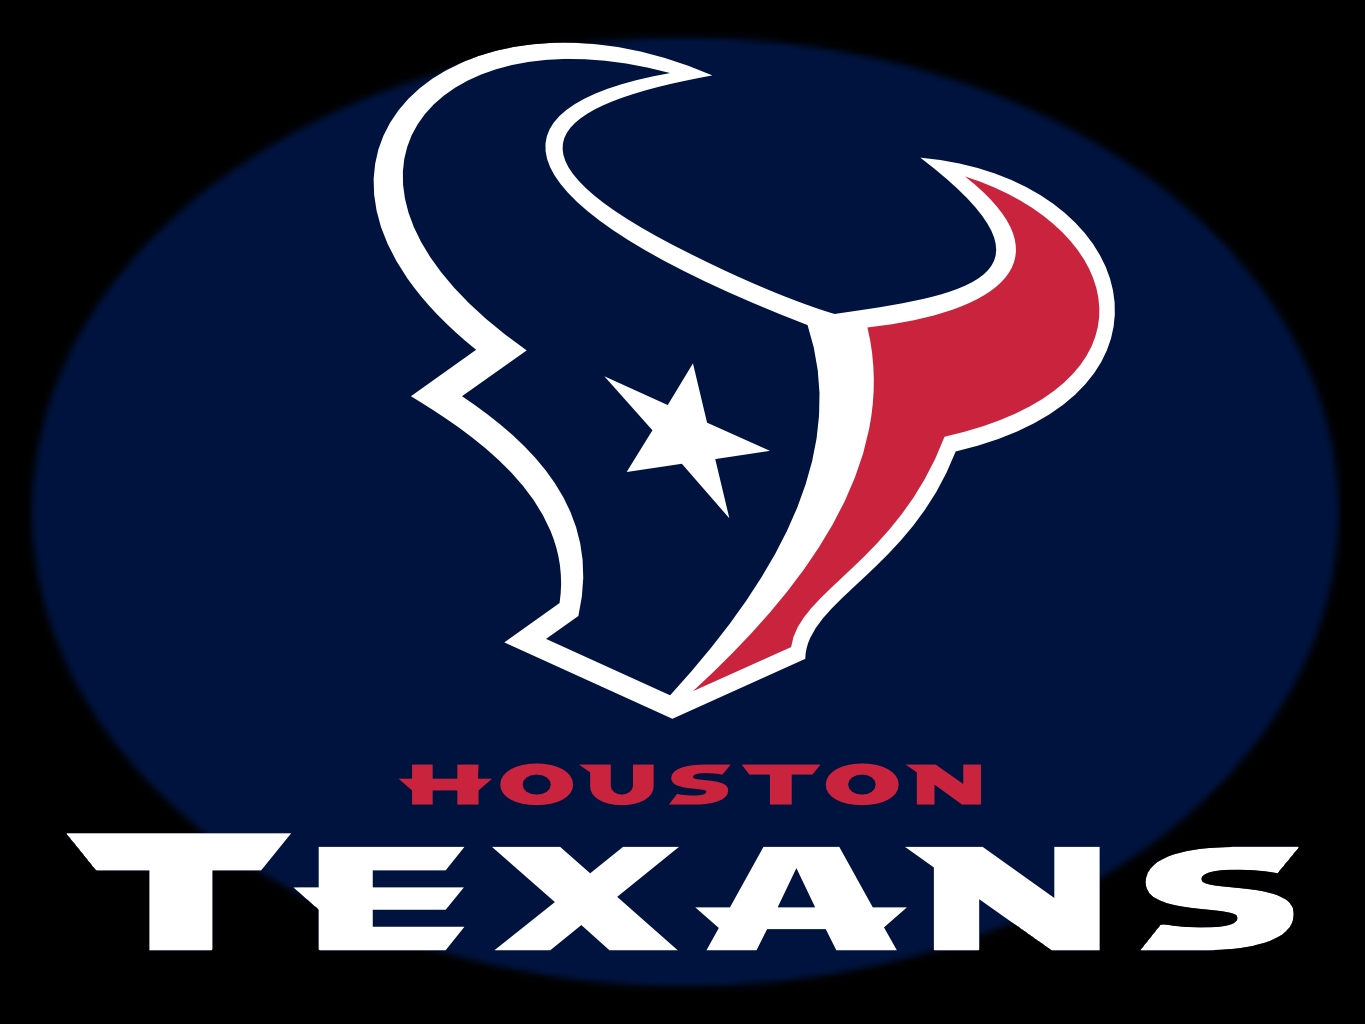 1. Houston Texans Nail Art Stickers - wide 6